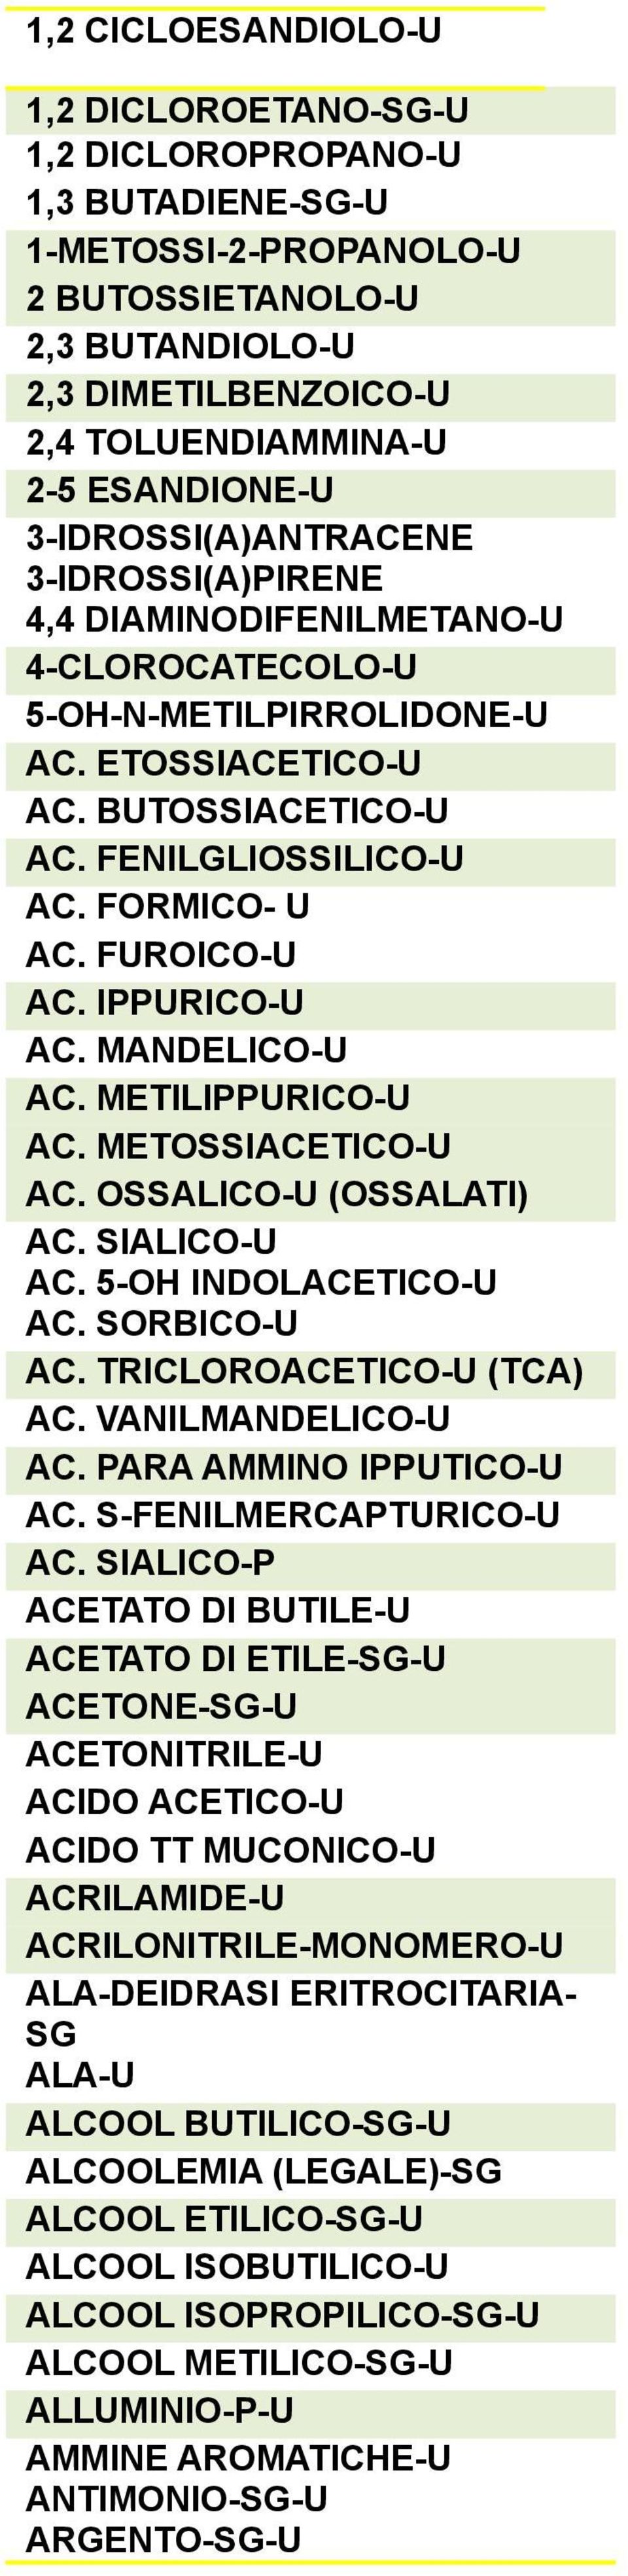 FORMICO- U AC. FUROICO-U AC. IPPURICO-U AC. MANDELICO-U AC. METILIPPURICO-U AC. METOSSIACETICO-U AC. OSSALICO-U (OSSALATI) AC. SIALICO-U AC. 5-OH INDOLACETICO-U AC. SORBICO-U AC.